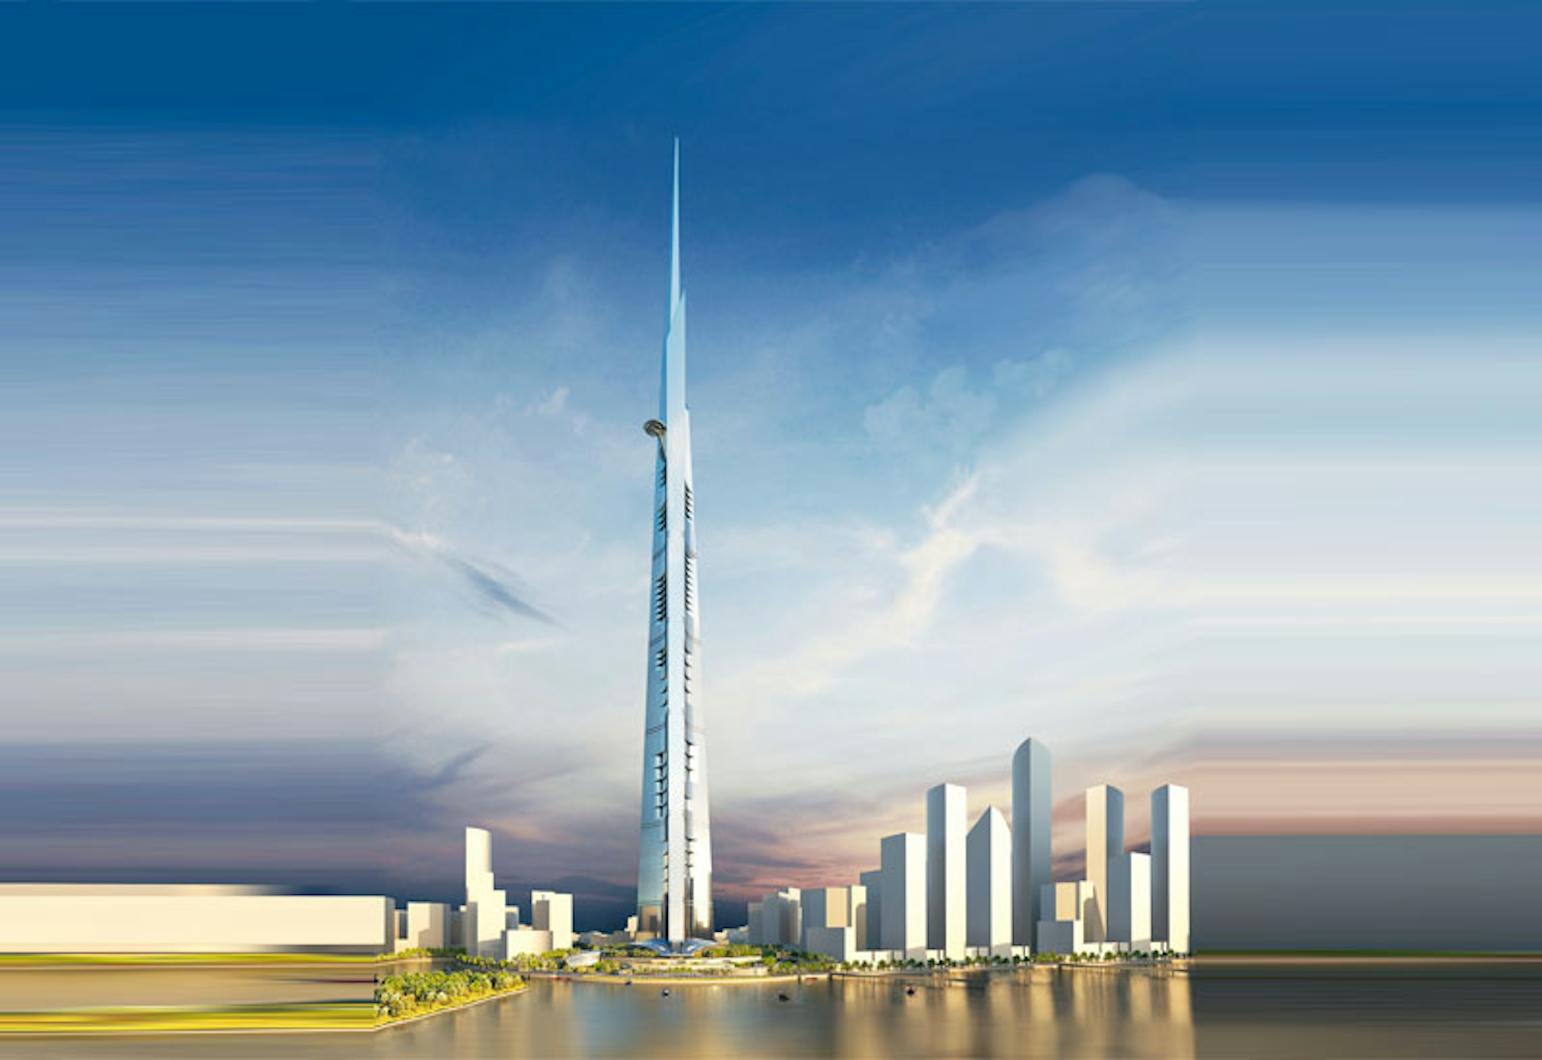 Jeddah Tower construction reaches 63rd floor News Archinect